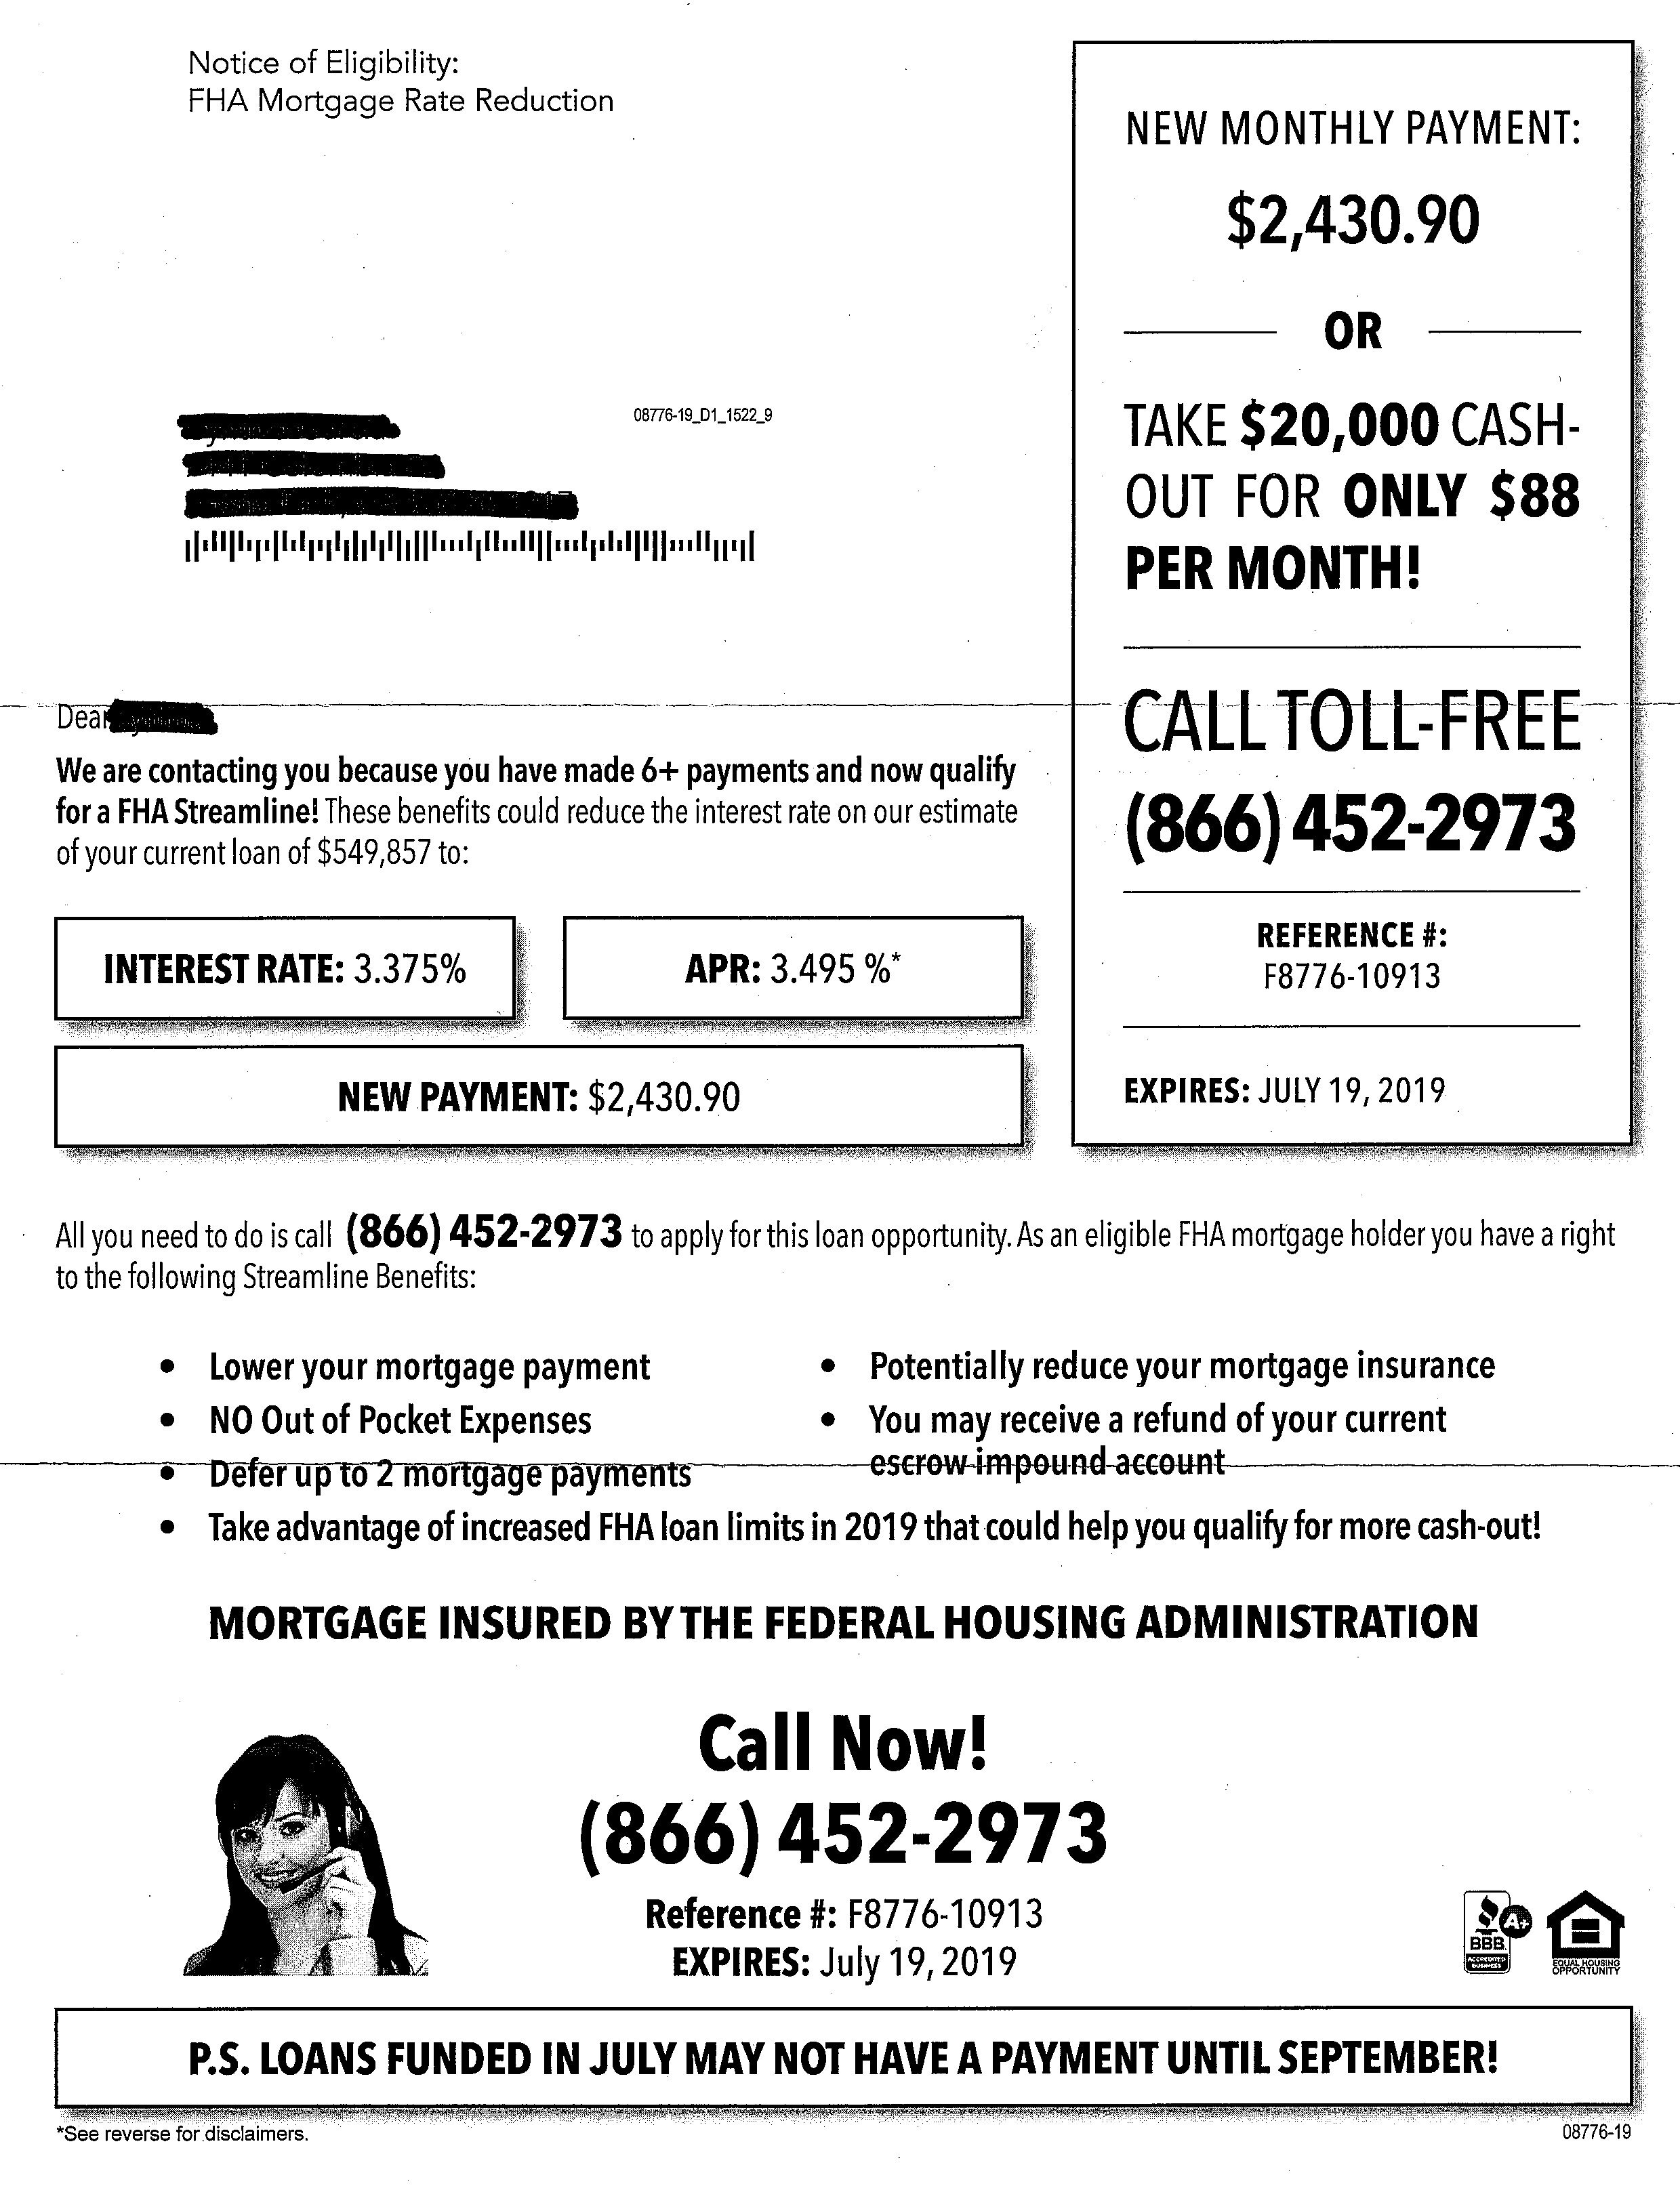 FHA Mortgage Mailer 8.jpg